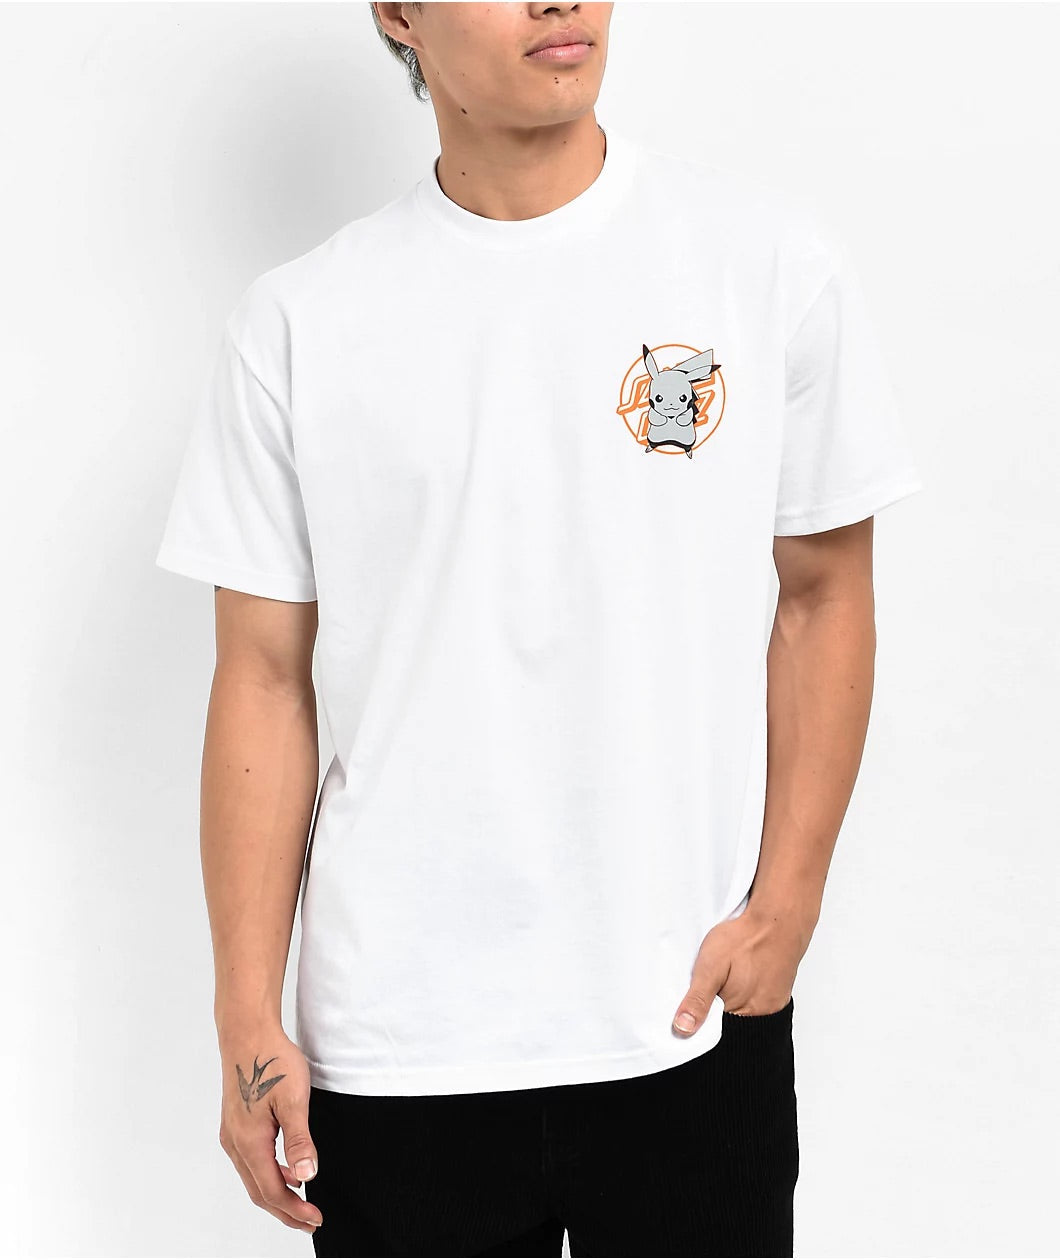 Santa Cruz & Pokémon Ghost Type 3 Shirt